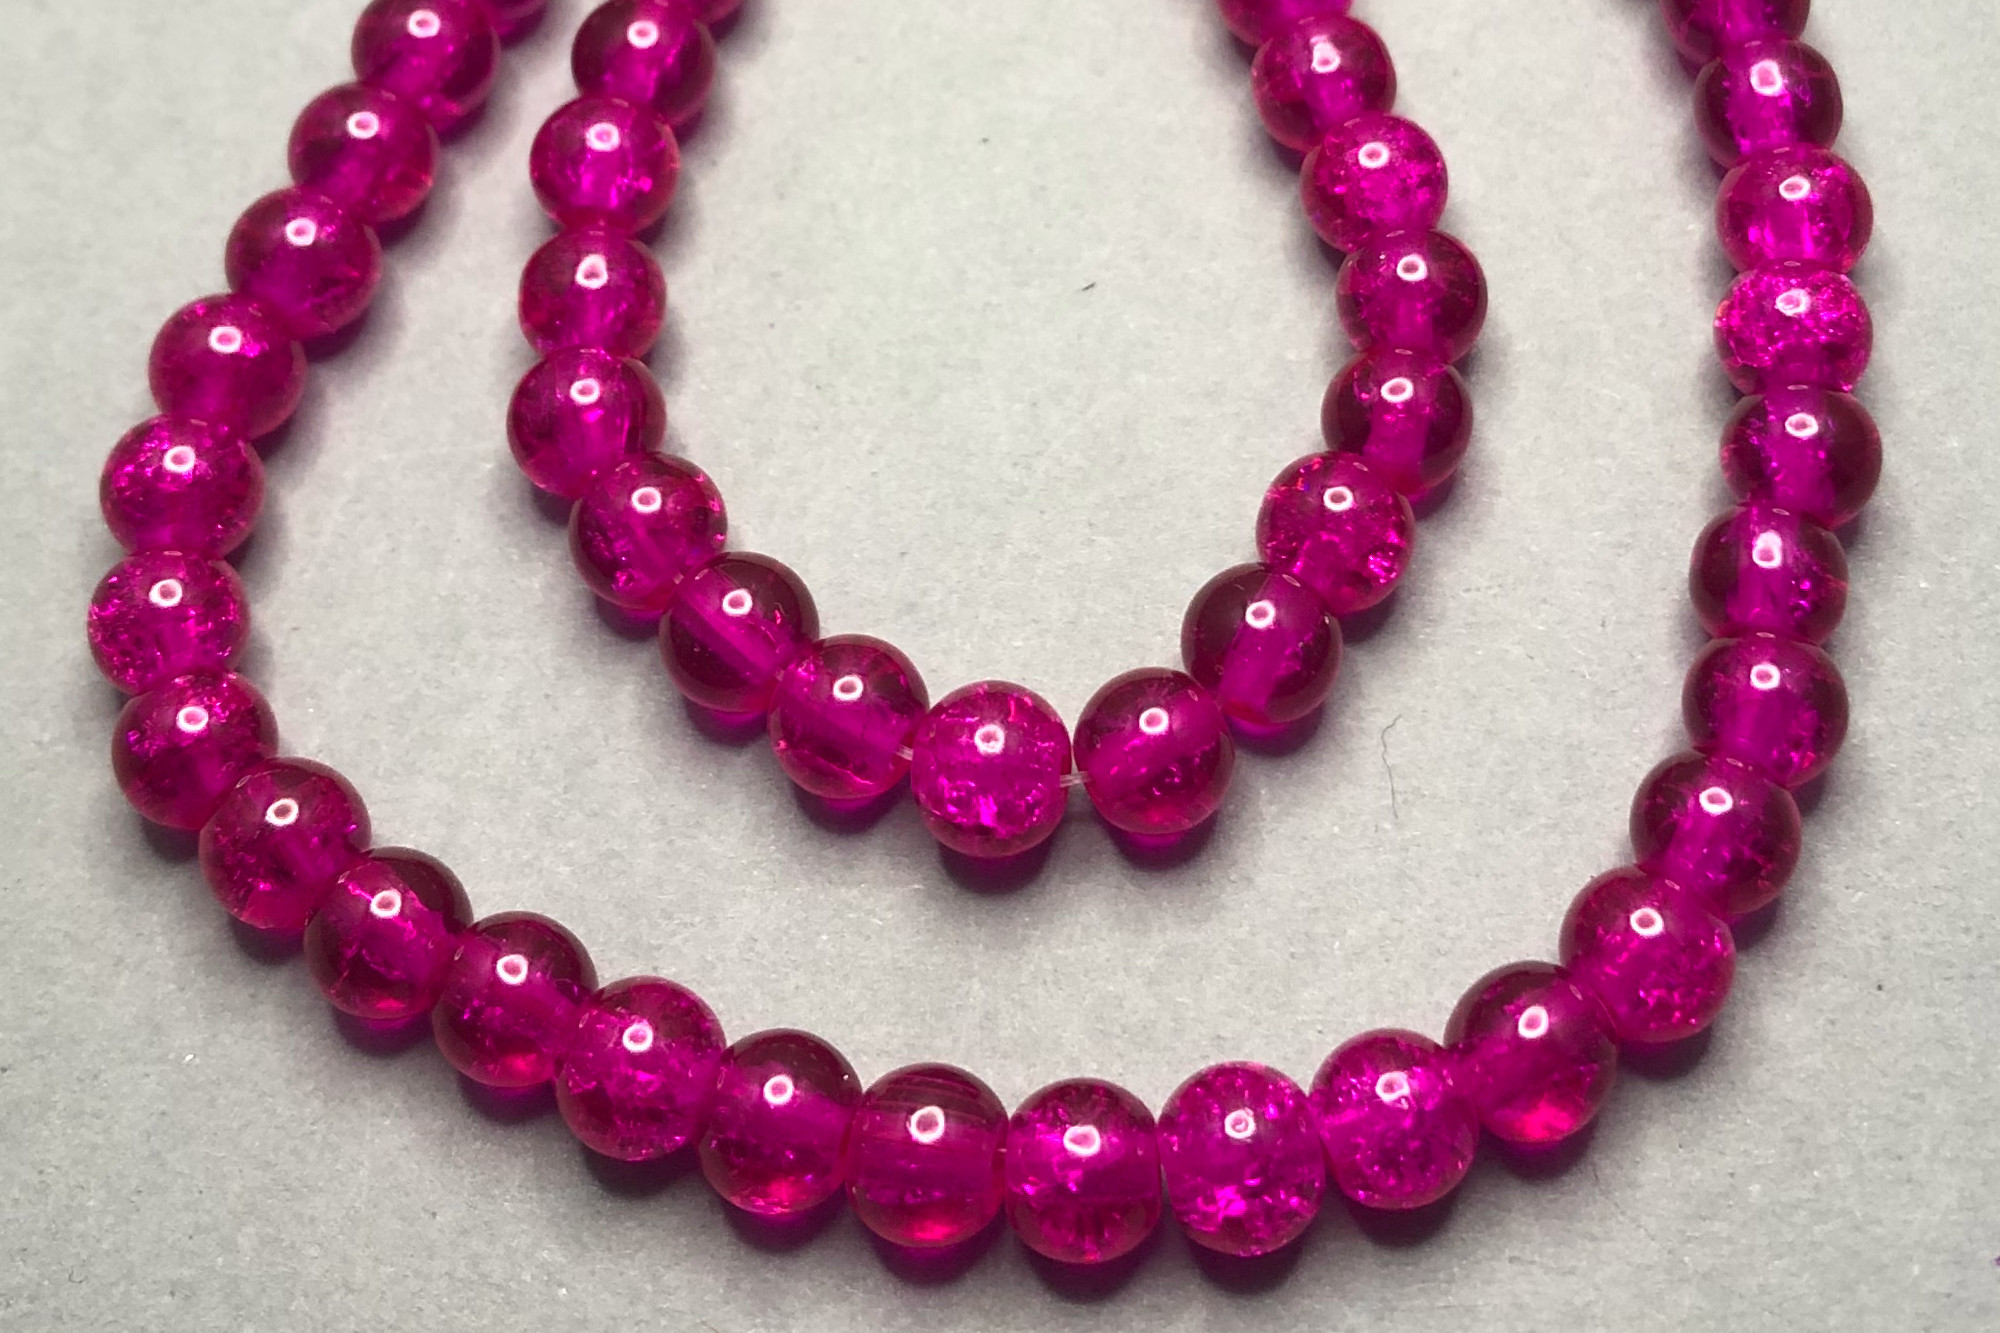 Dark Neon Pink Crackle Glass Beads